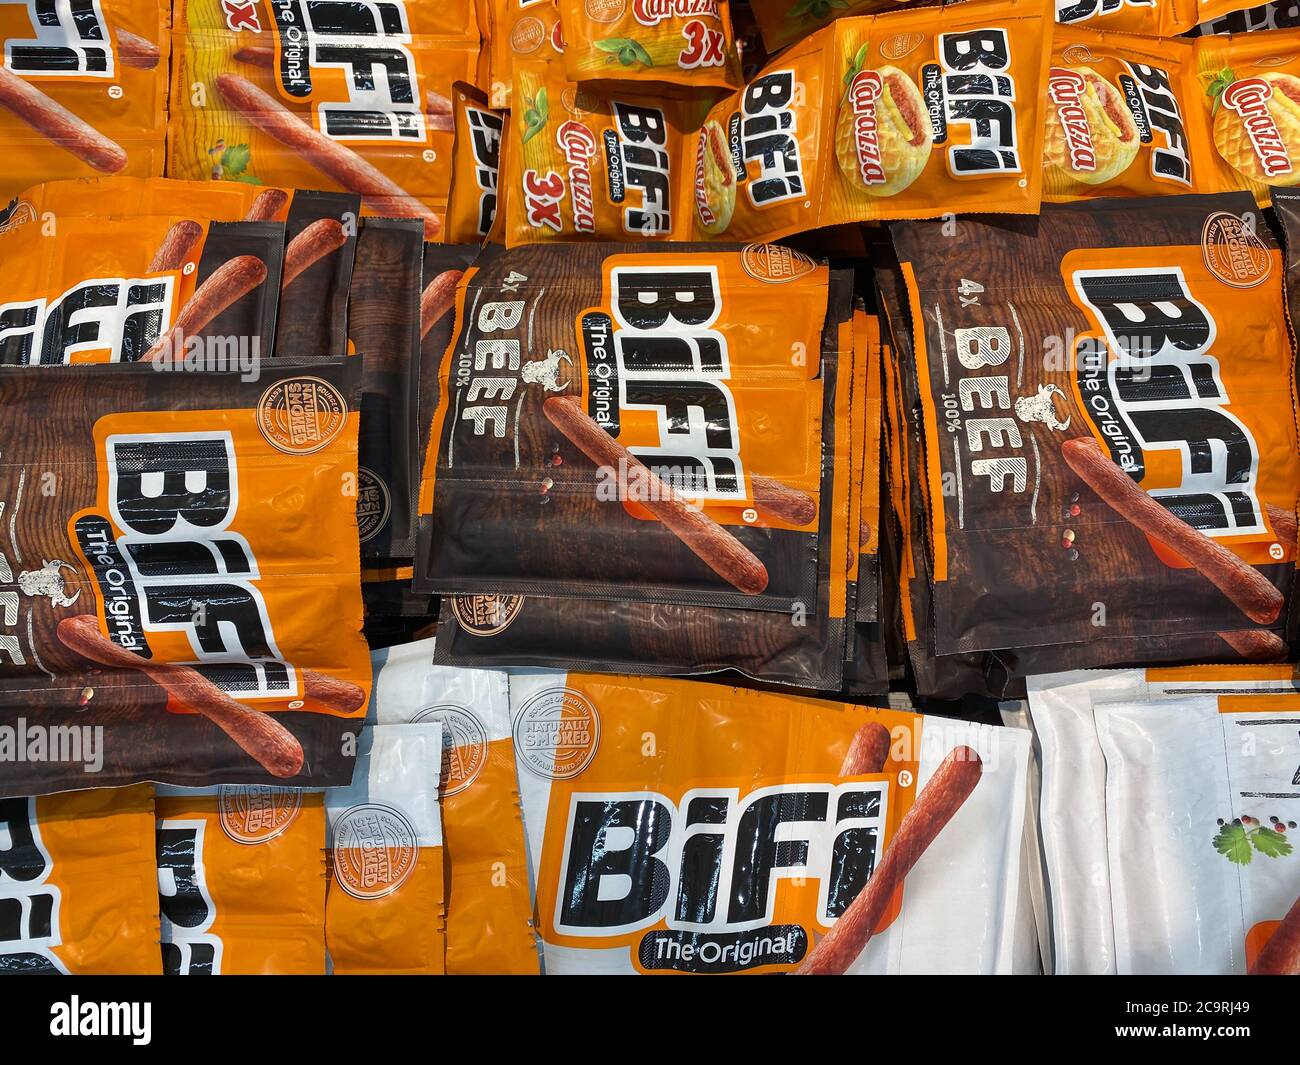 Bifi hi-res stock photography and images - Alamy